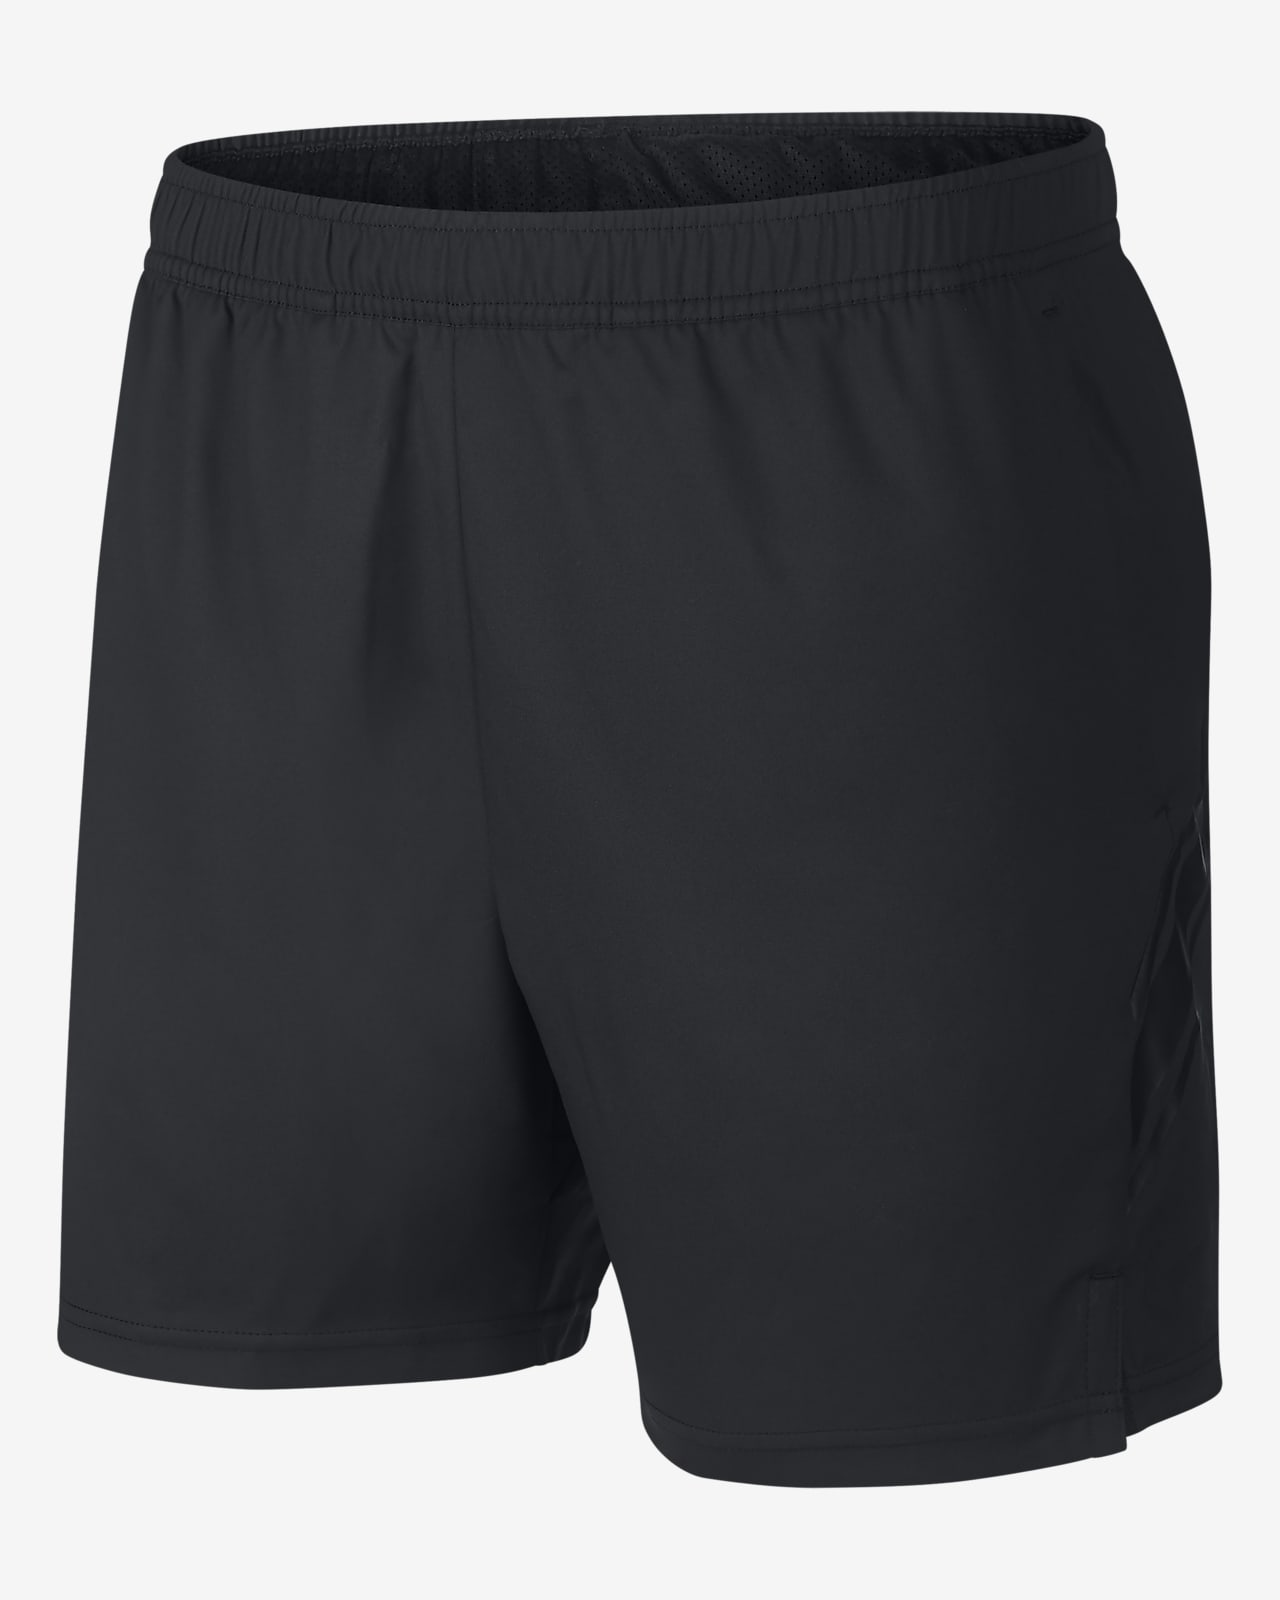 NikeCourt Dri-FIT Men's Tennis Shorts 